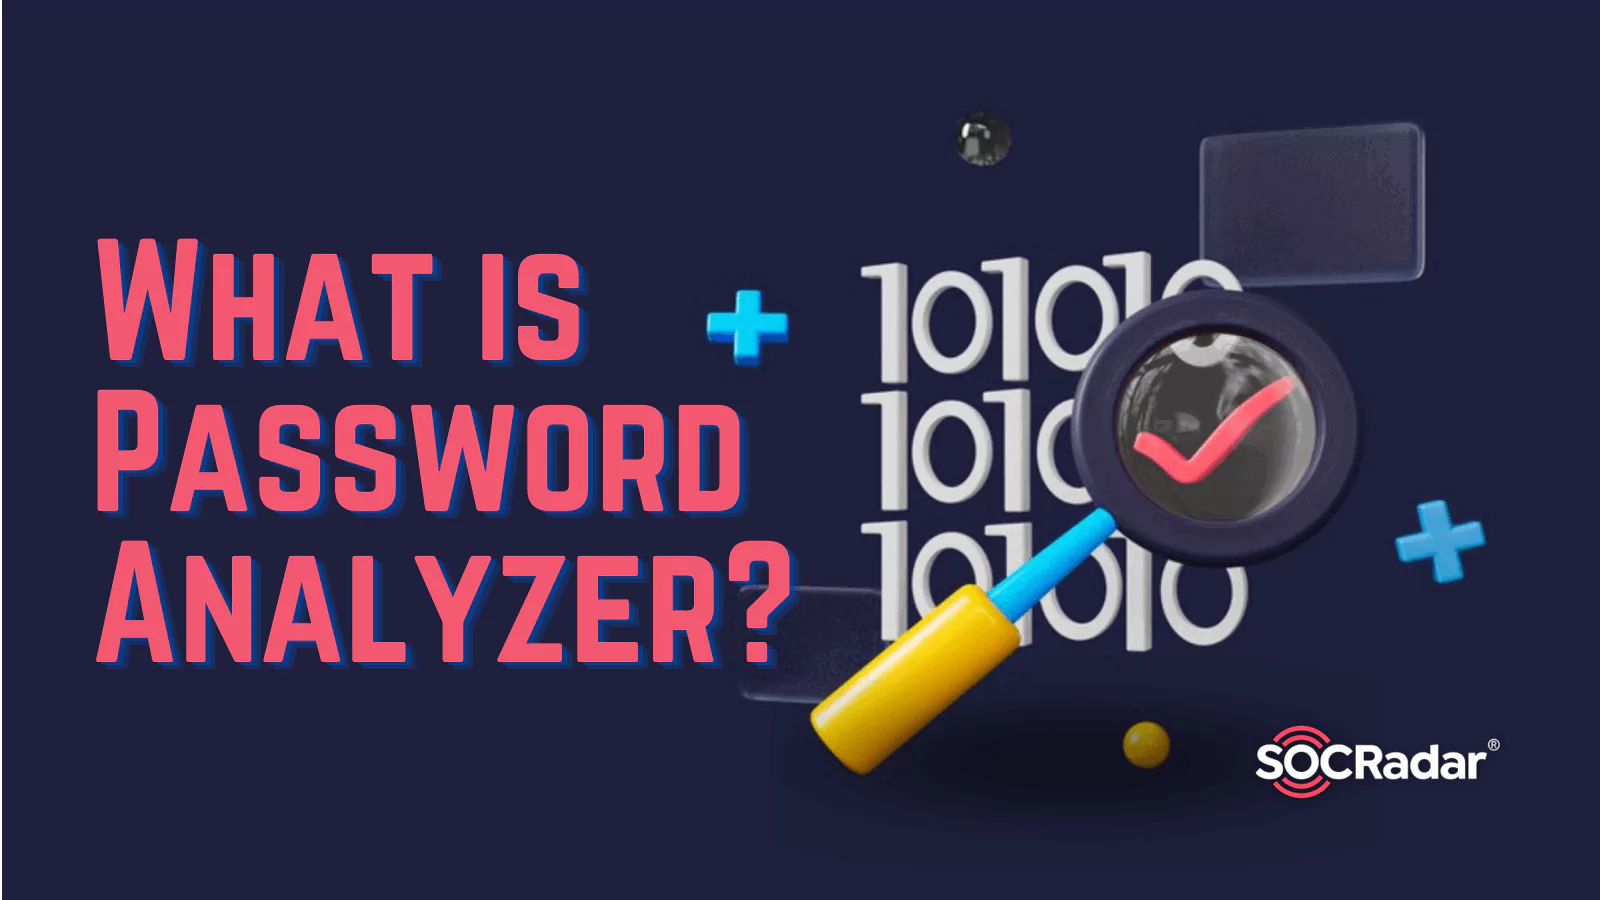 SOCRadar® Cyber Intelligence Inc. | What is Password Analyzer?